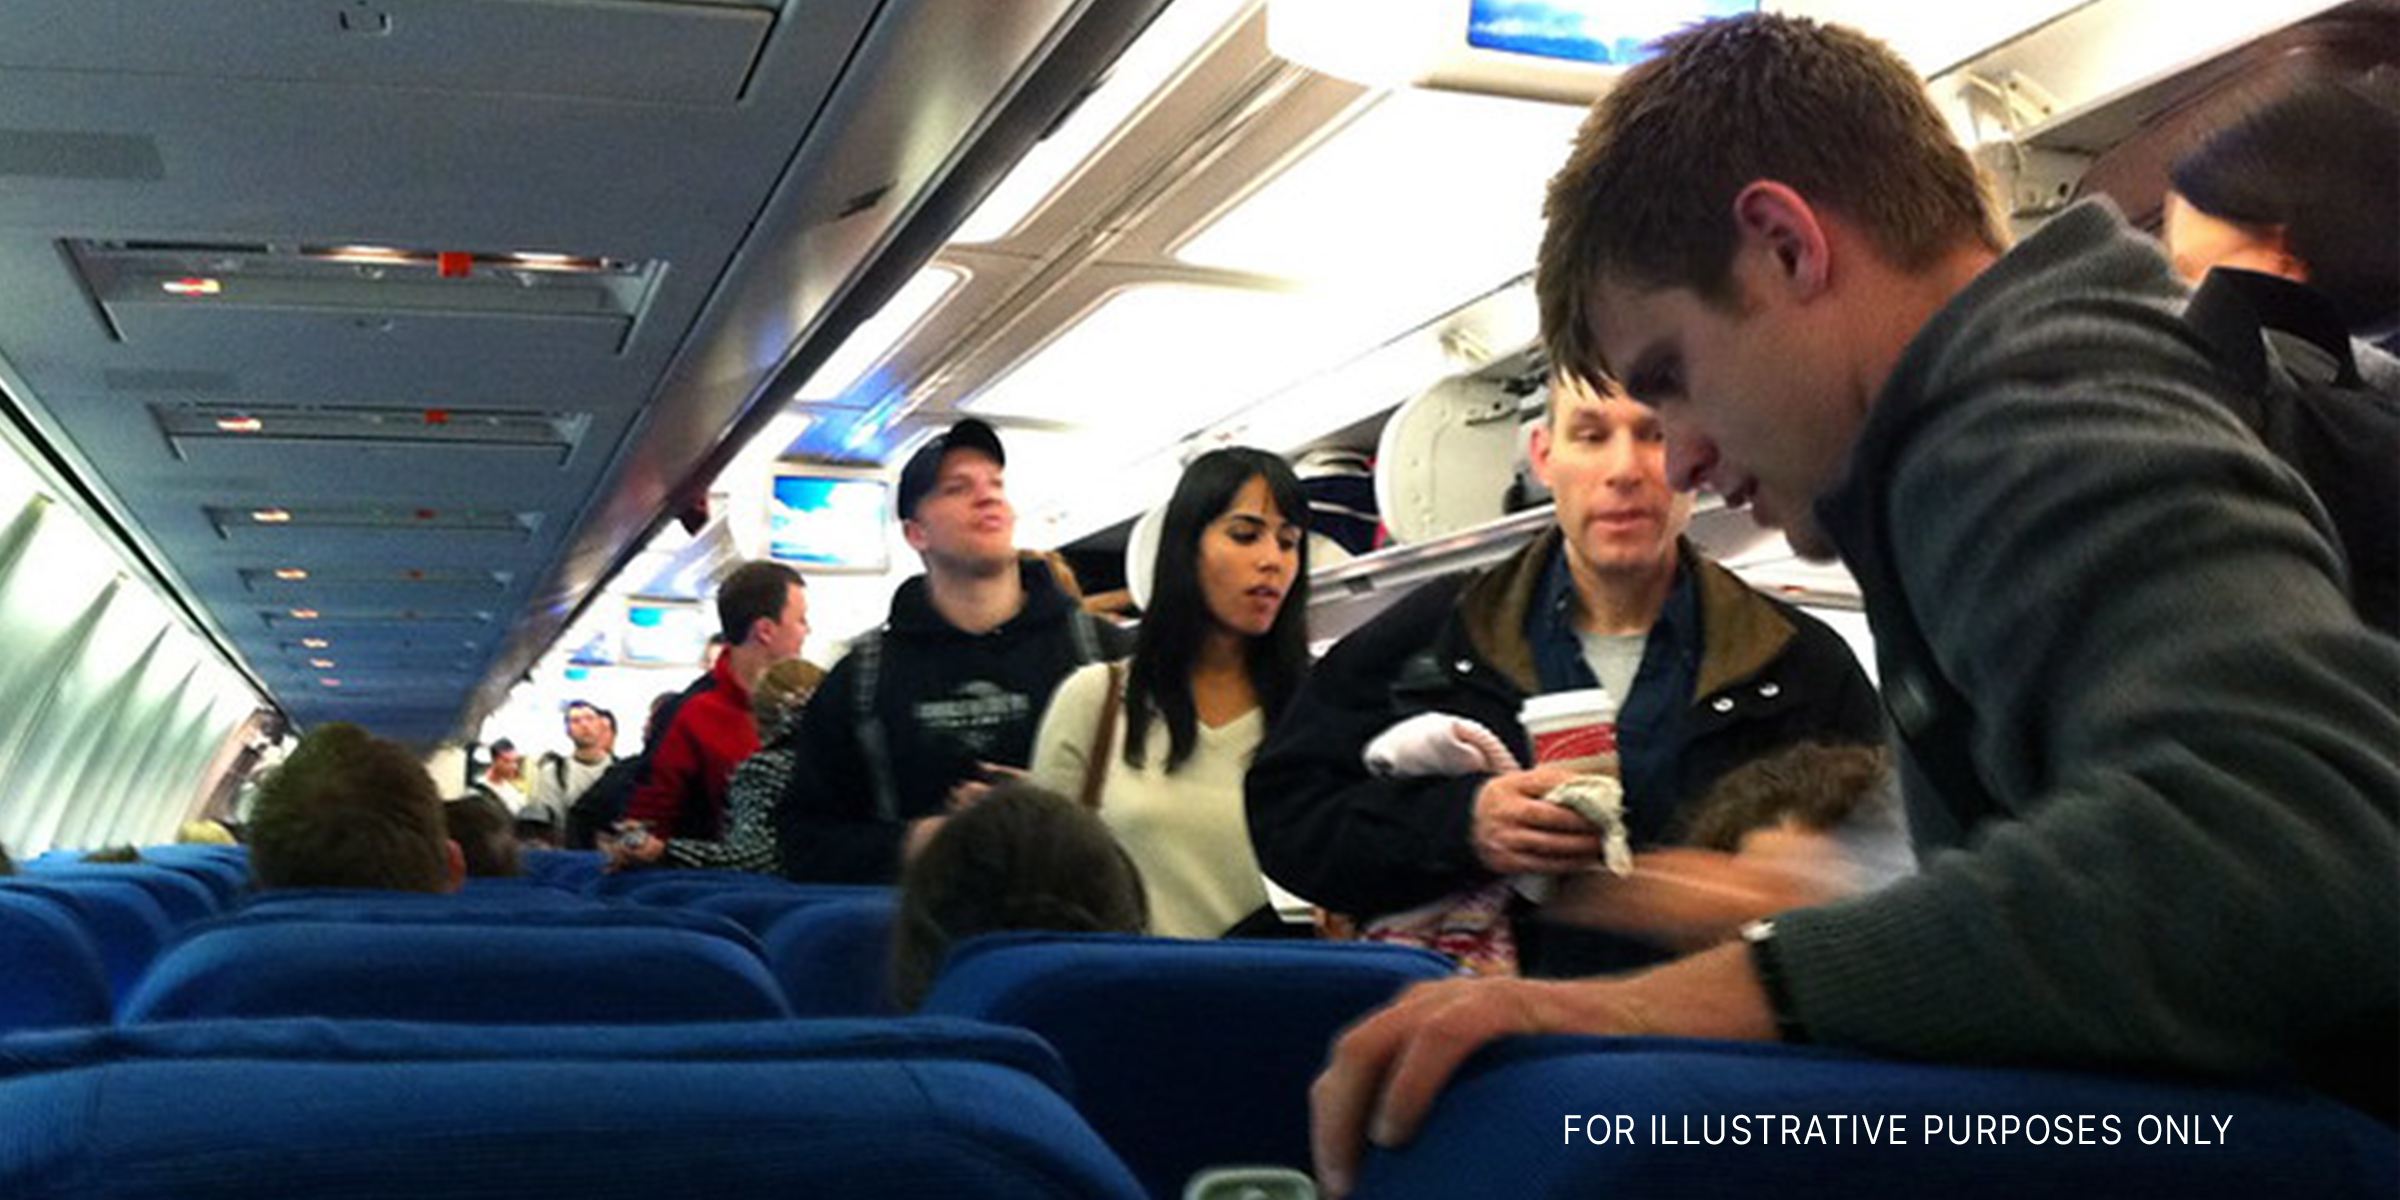 Passengers on a plane | Source: flickr.com/MattHurst/CC BY-SA 2.0